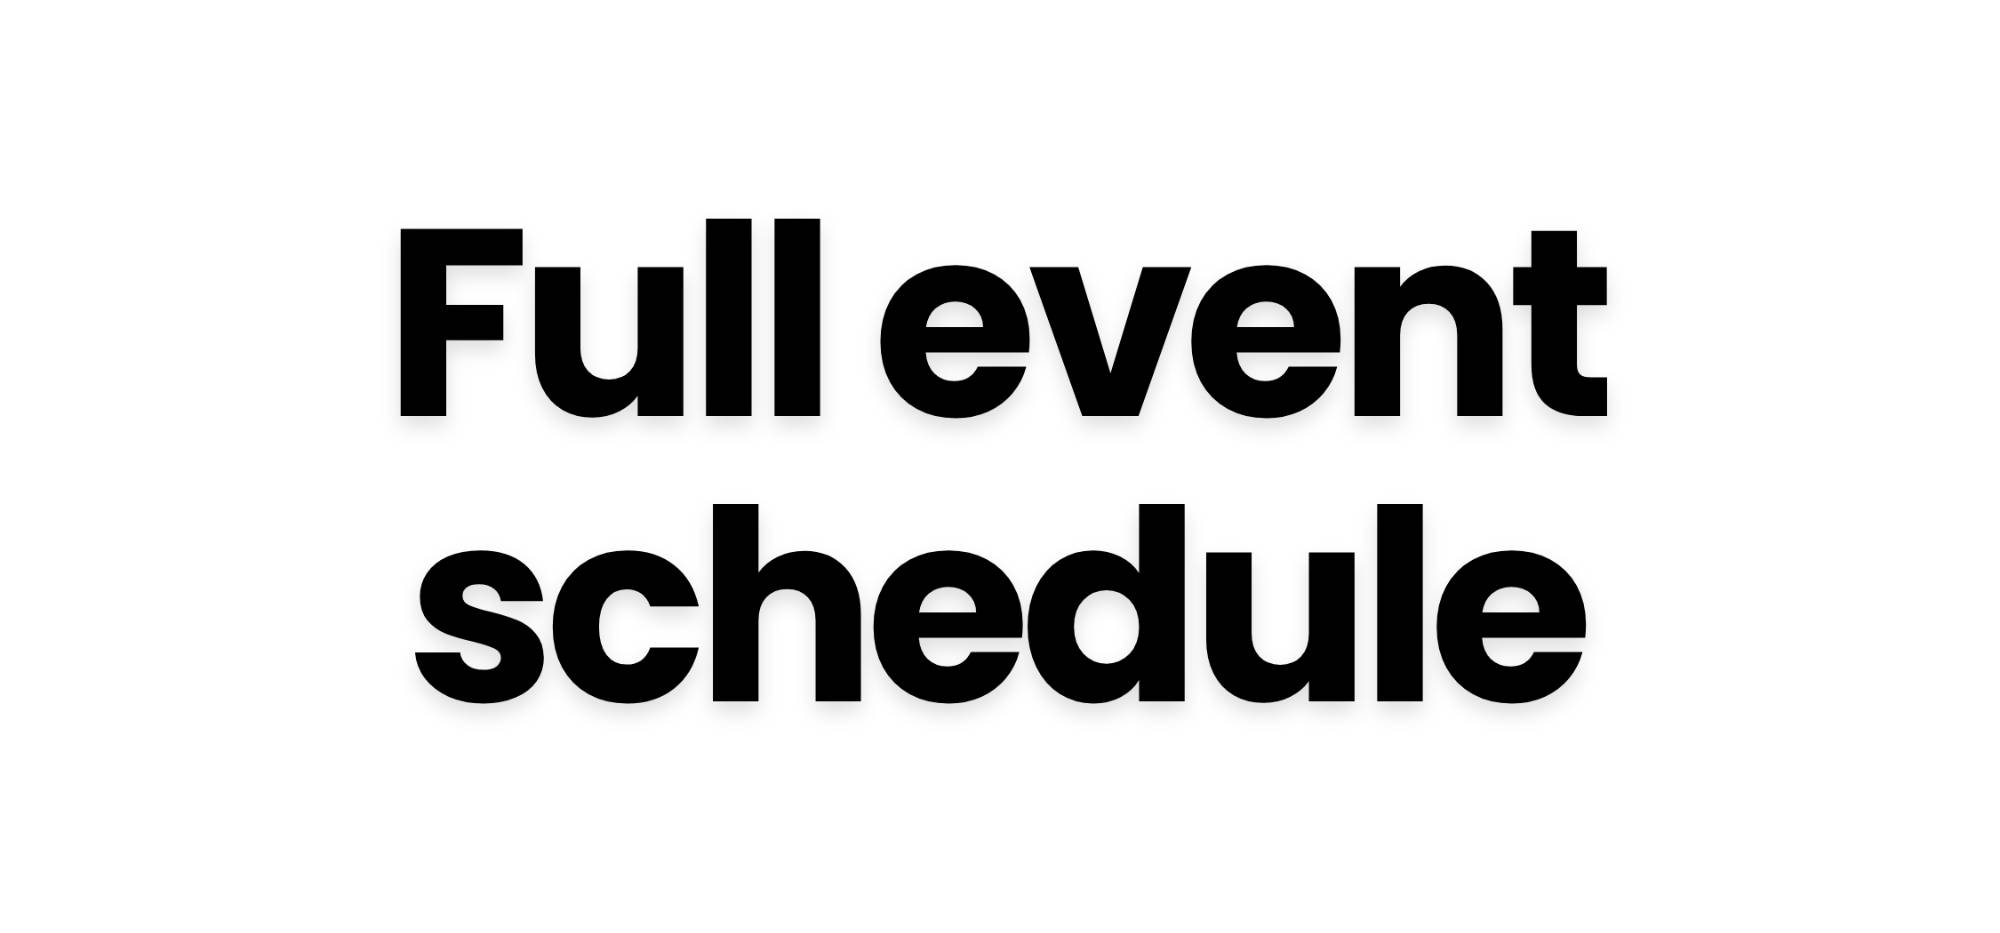 Full event schedule